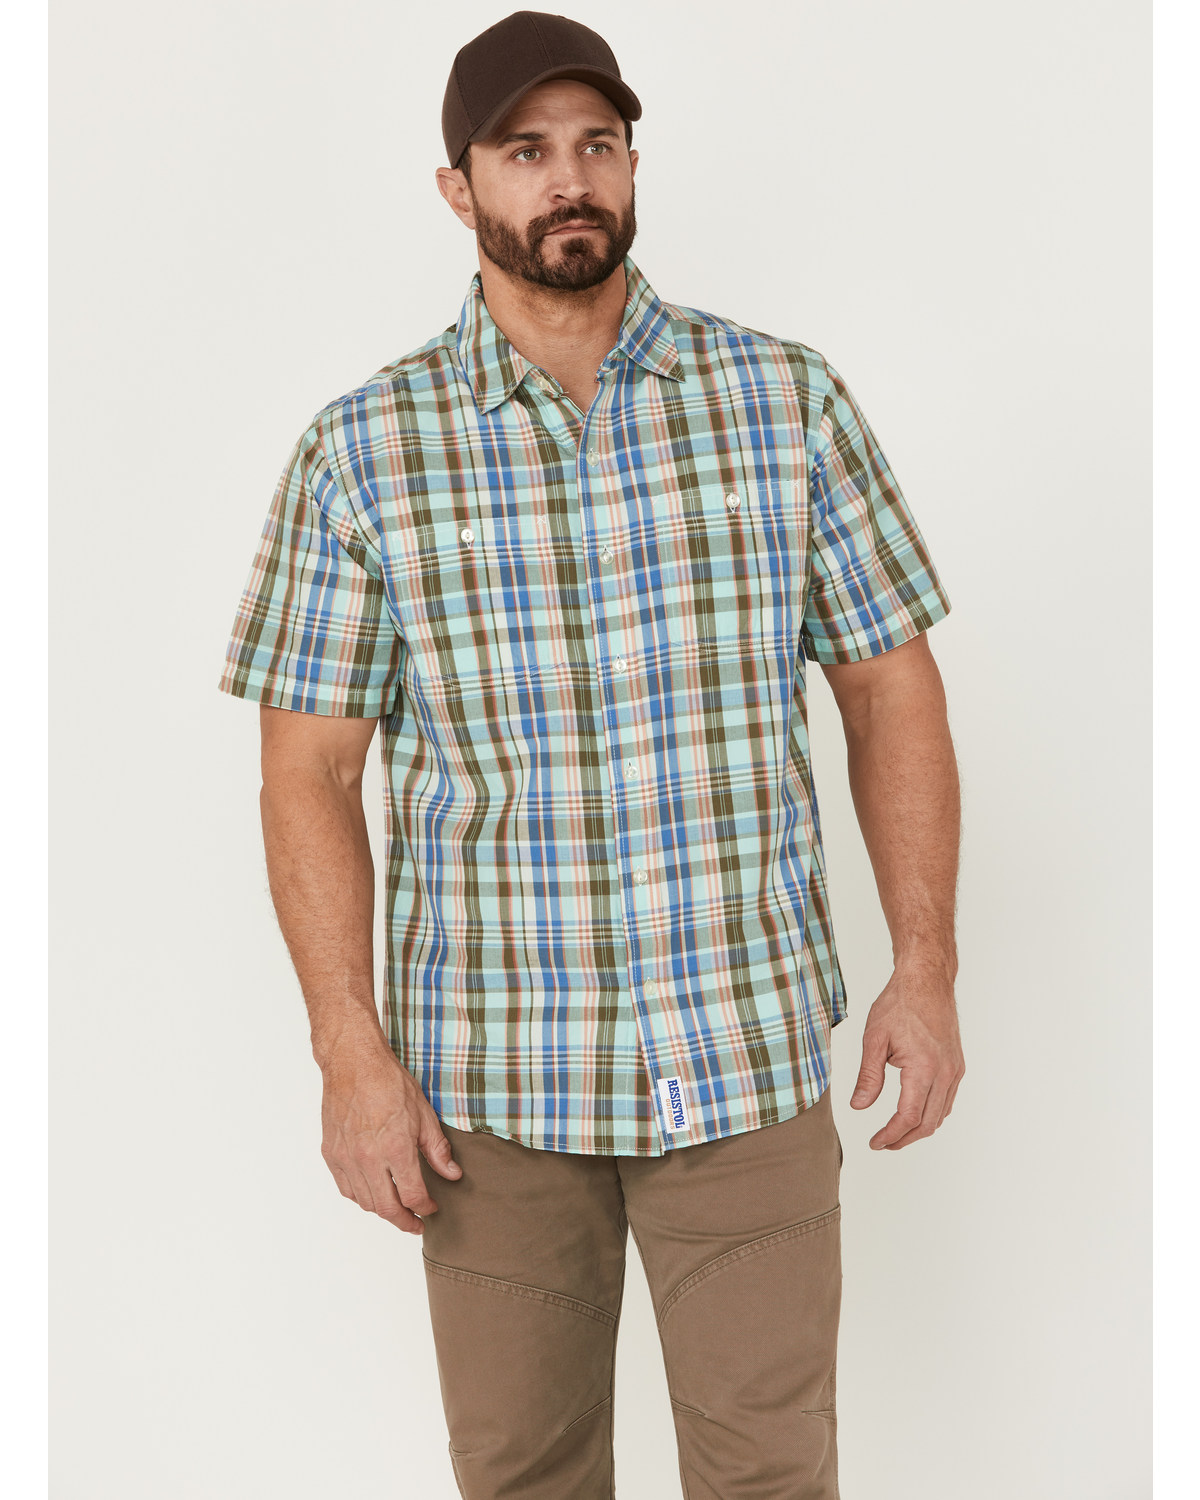 Resistol Men's Hampton Plaid Print Short Sleeve Button Down Western Shirt